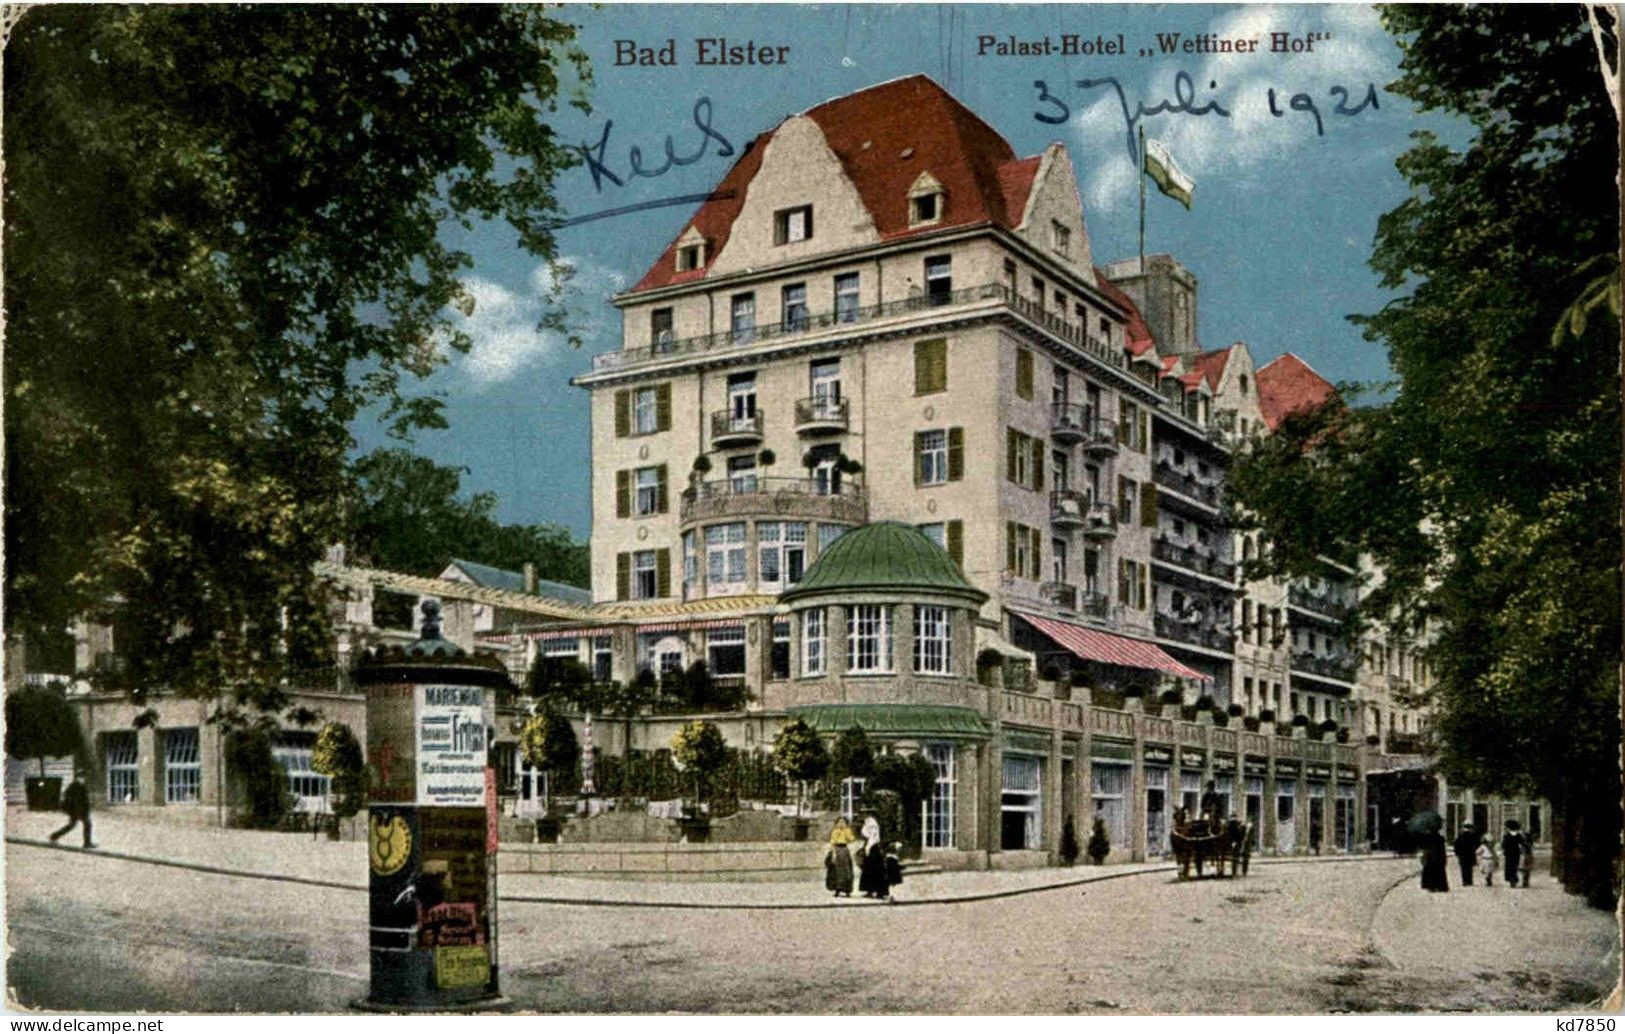 Bad Elster - Palast Hotel - Bad Elster